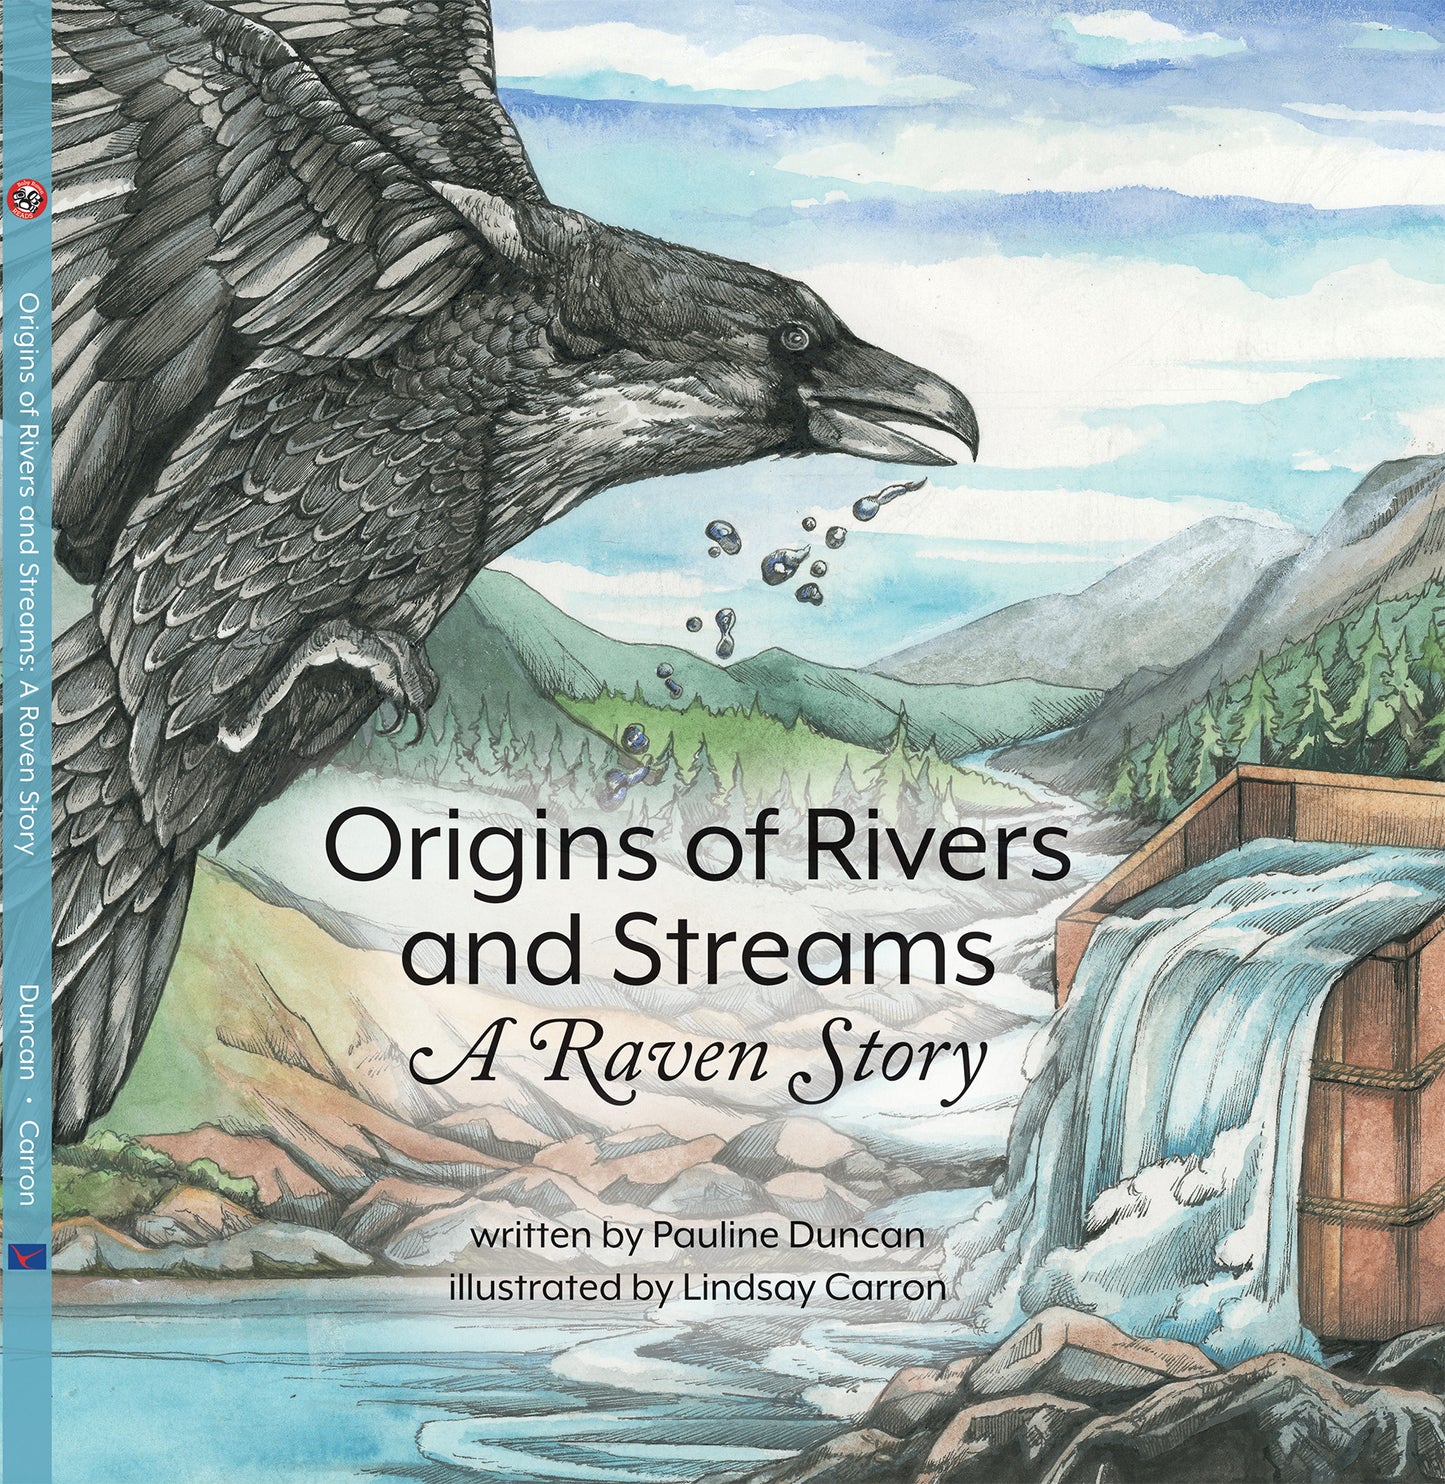 Book, BRR - “Origins of Rivers and Streams", P. Duncan